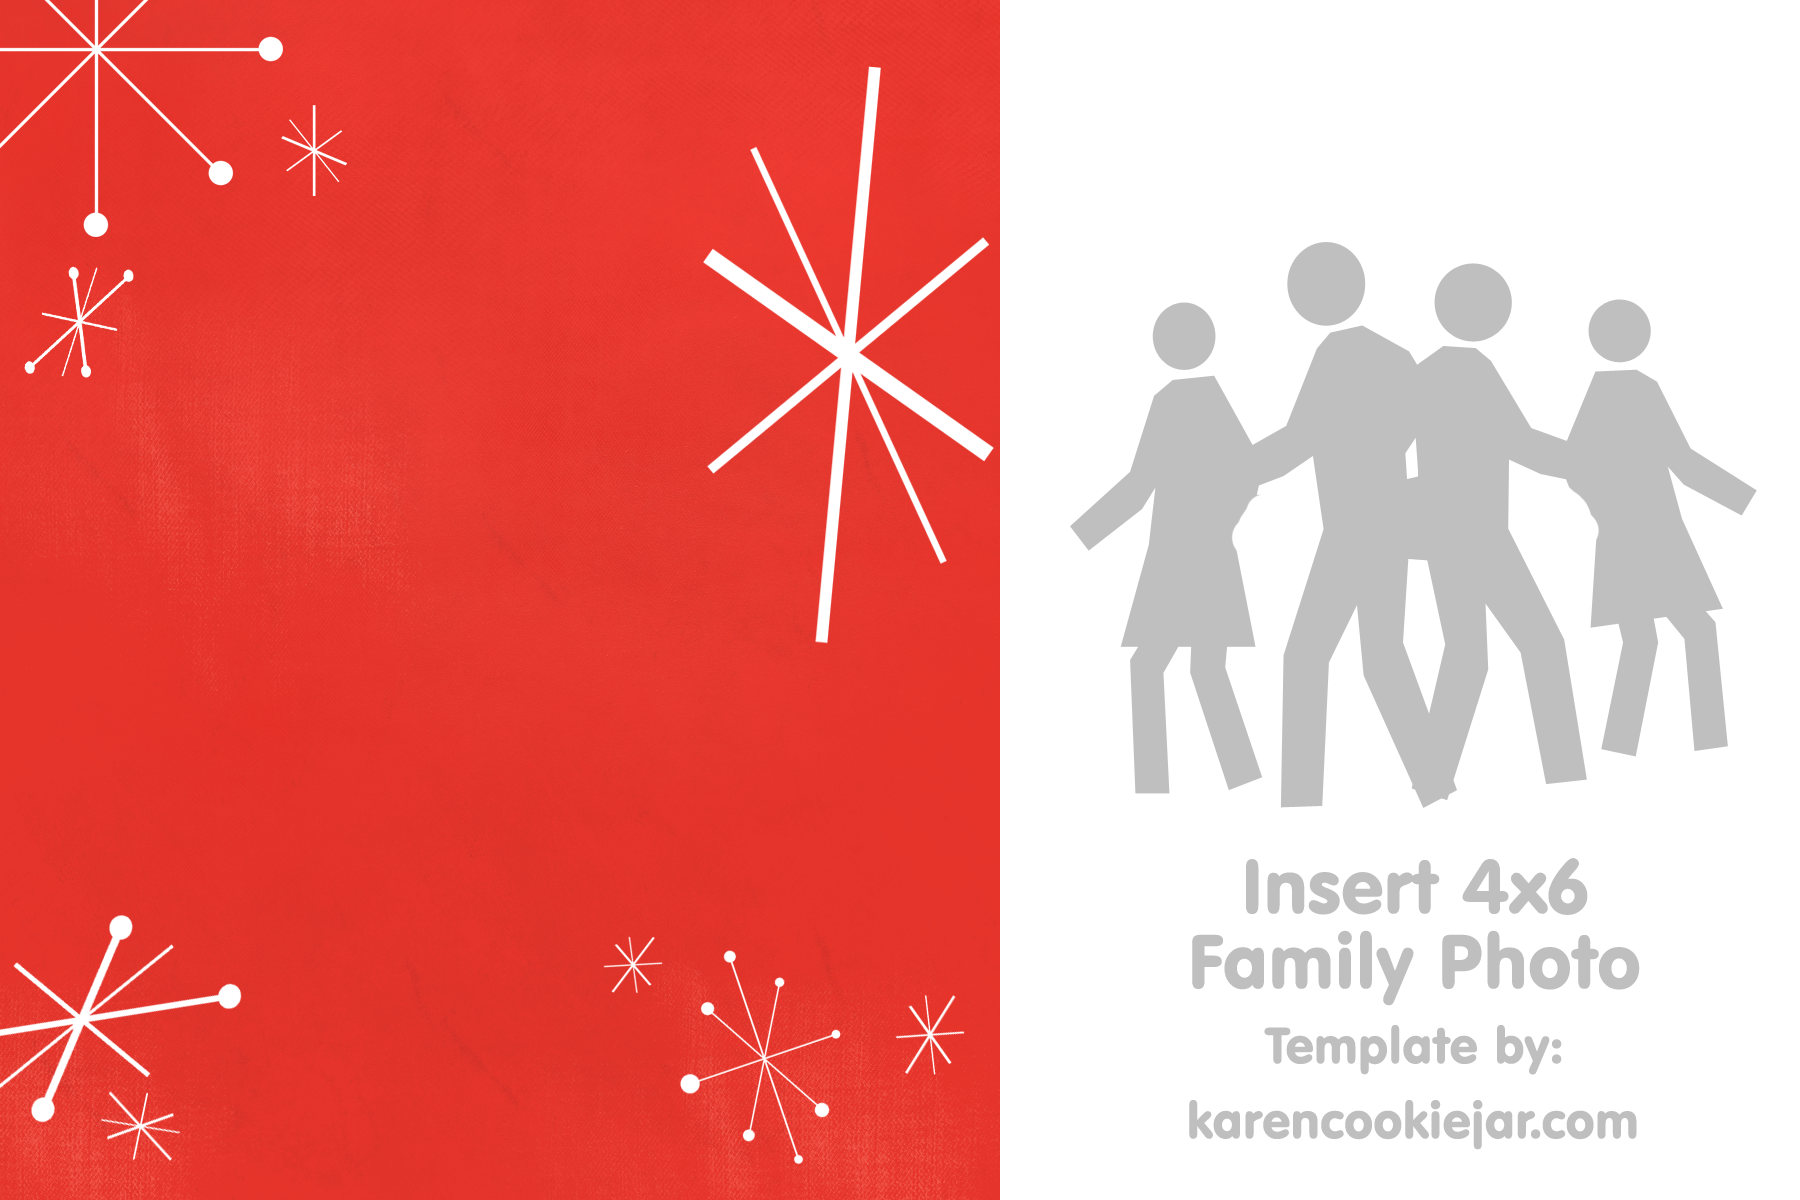 Free Photo Christmas Card Template Karen Cookie Jar